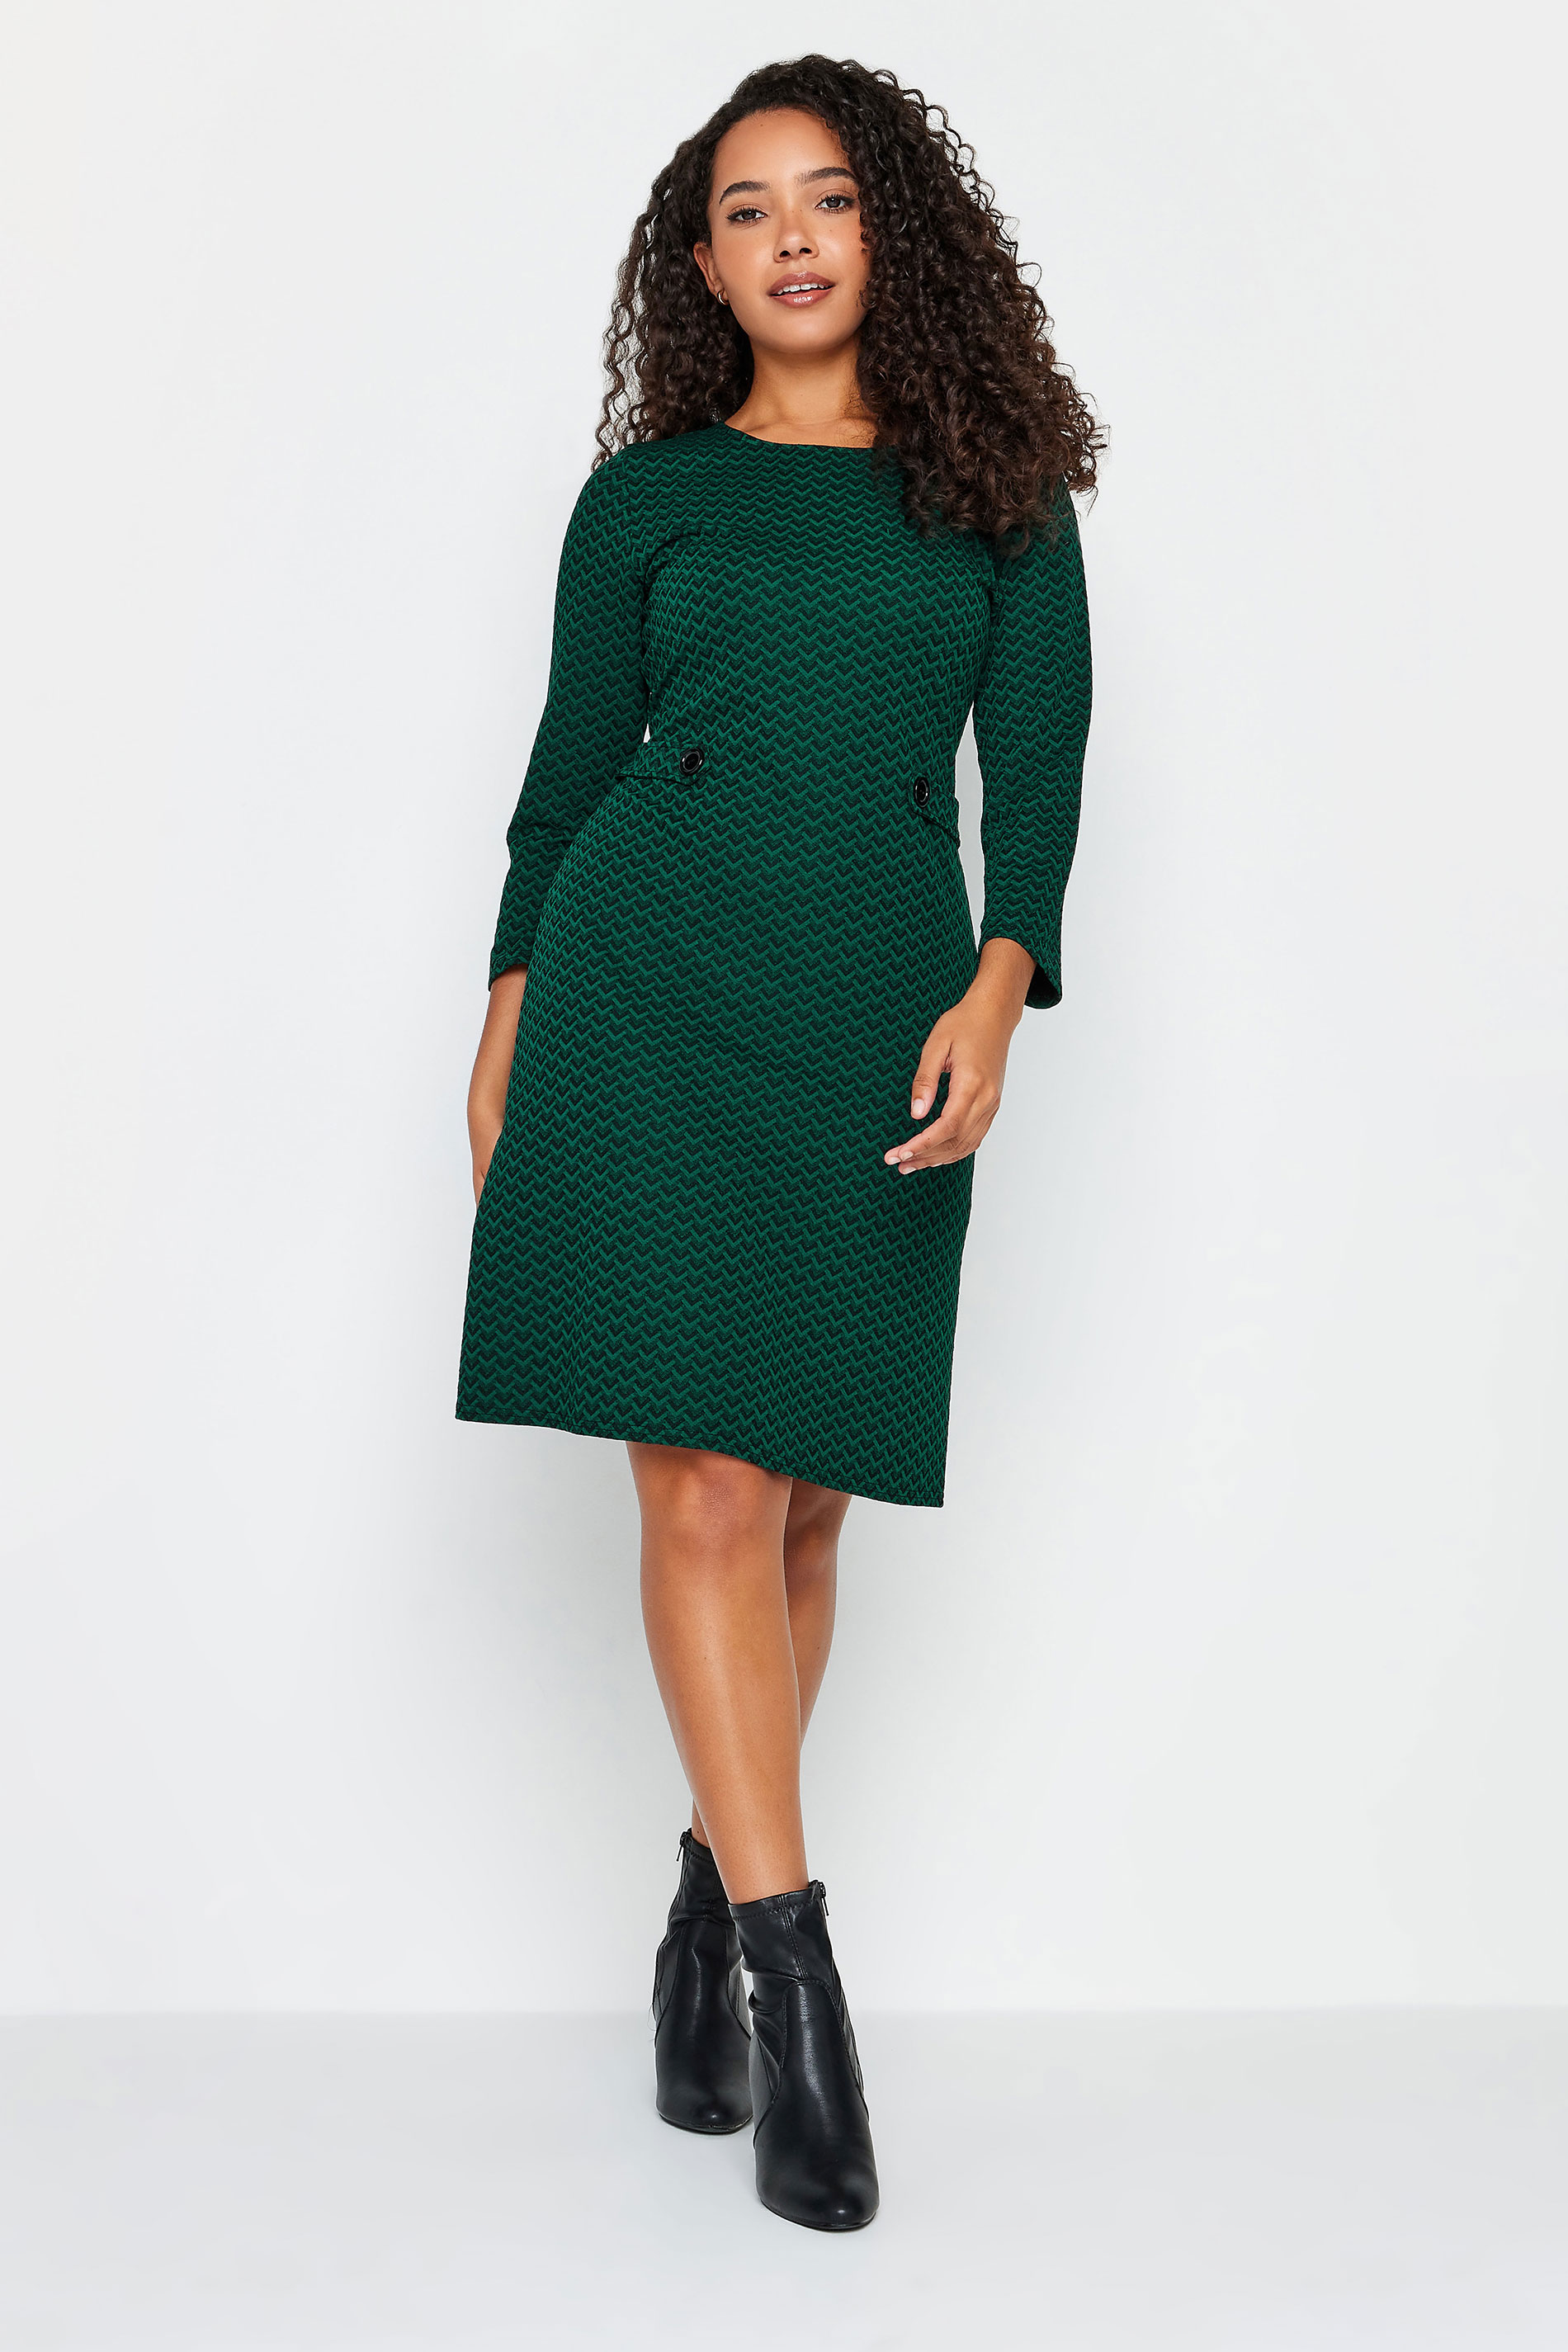 M&Co Green Jacquard Shift Dress | M&Co 1